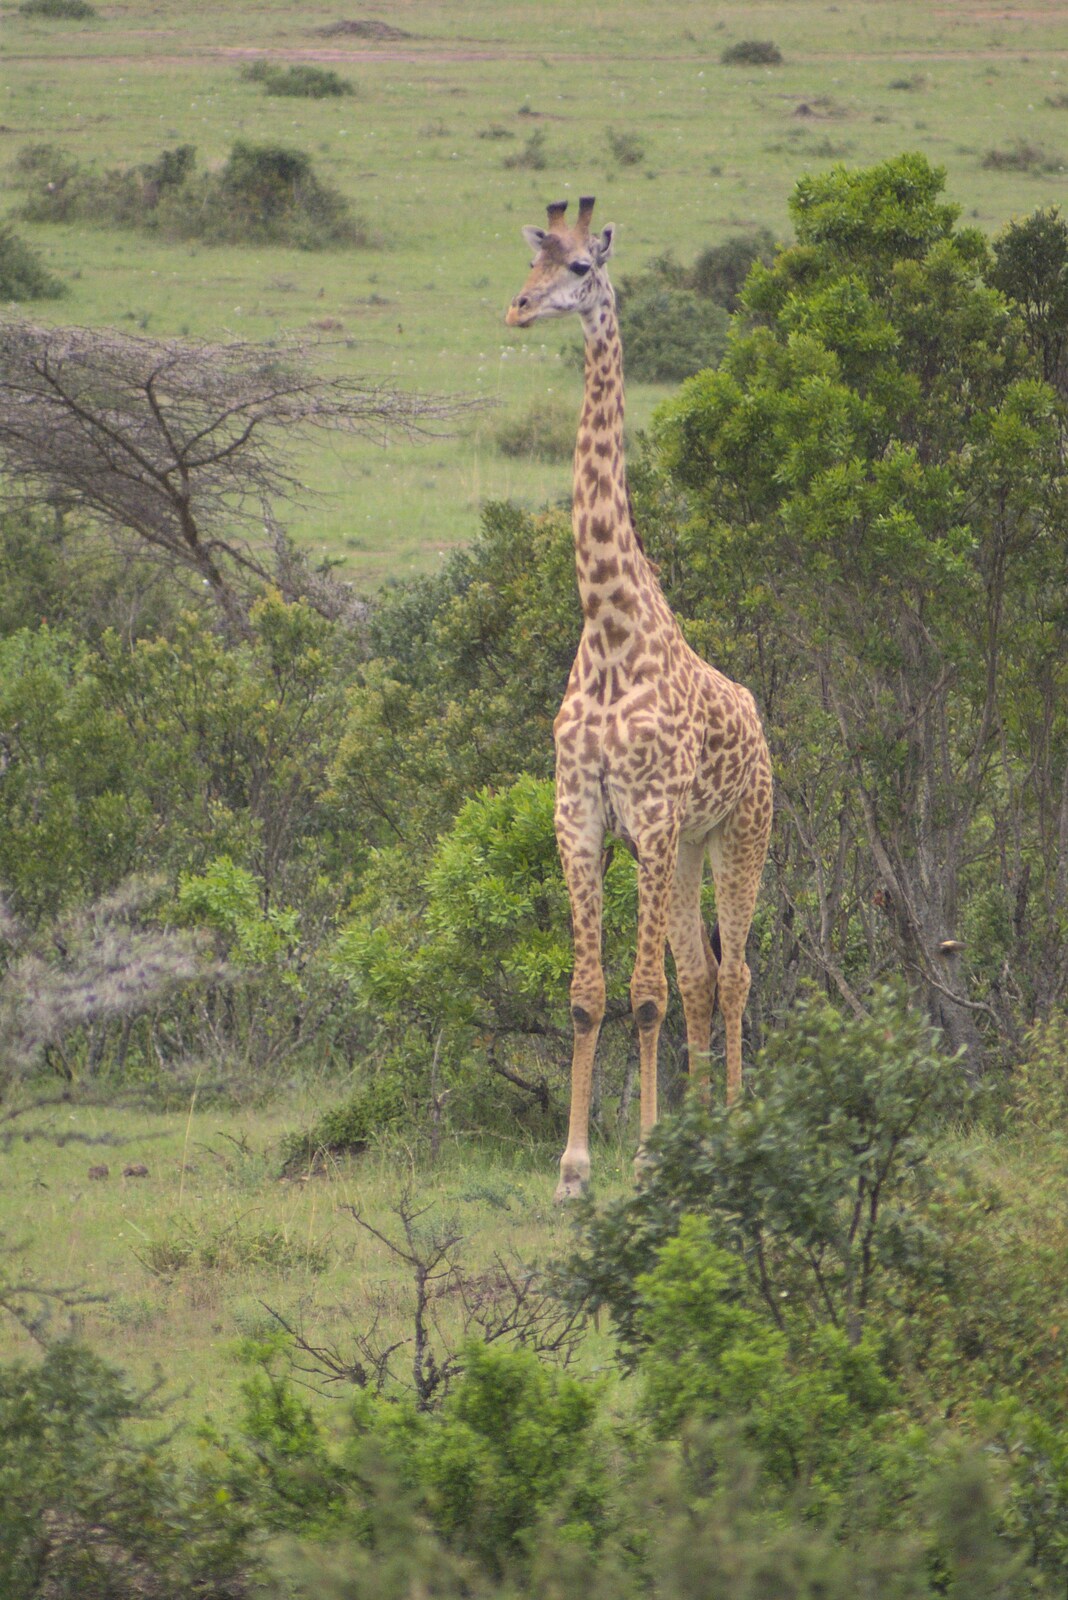 Our first close encounter: a giraffe from Maasai Mara Safari and a Maasai Village, Ololaimutia, Kenya - 5th November 2010